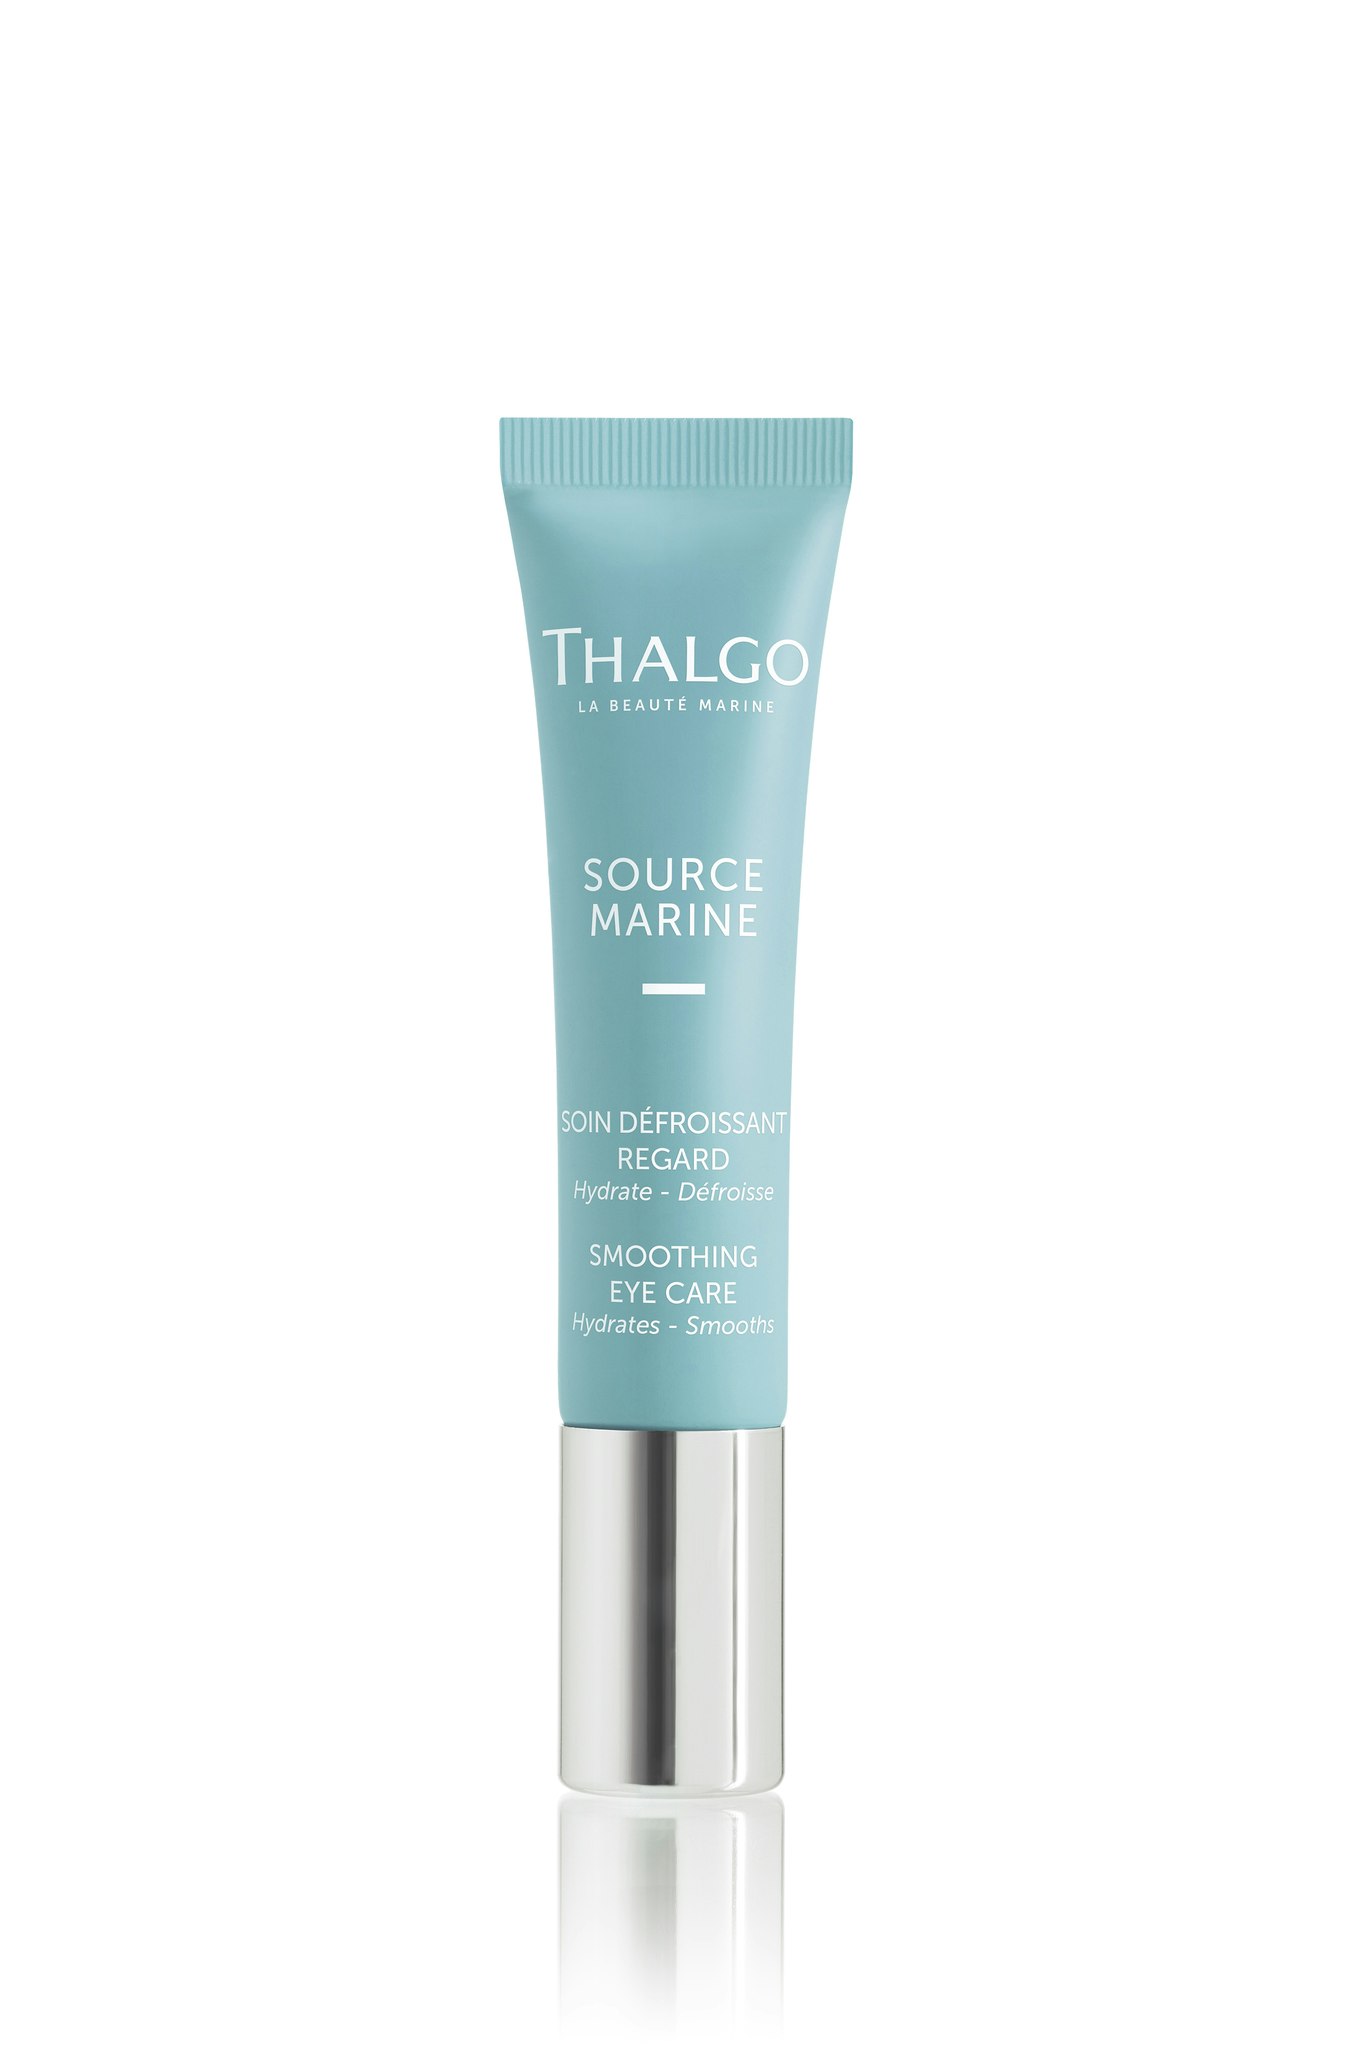 Thalgo Source Marine Smoothing Eye Care